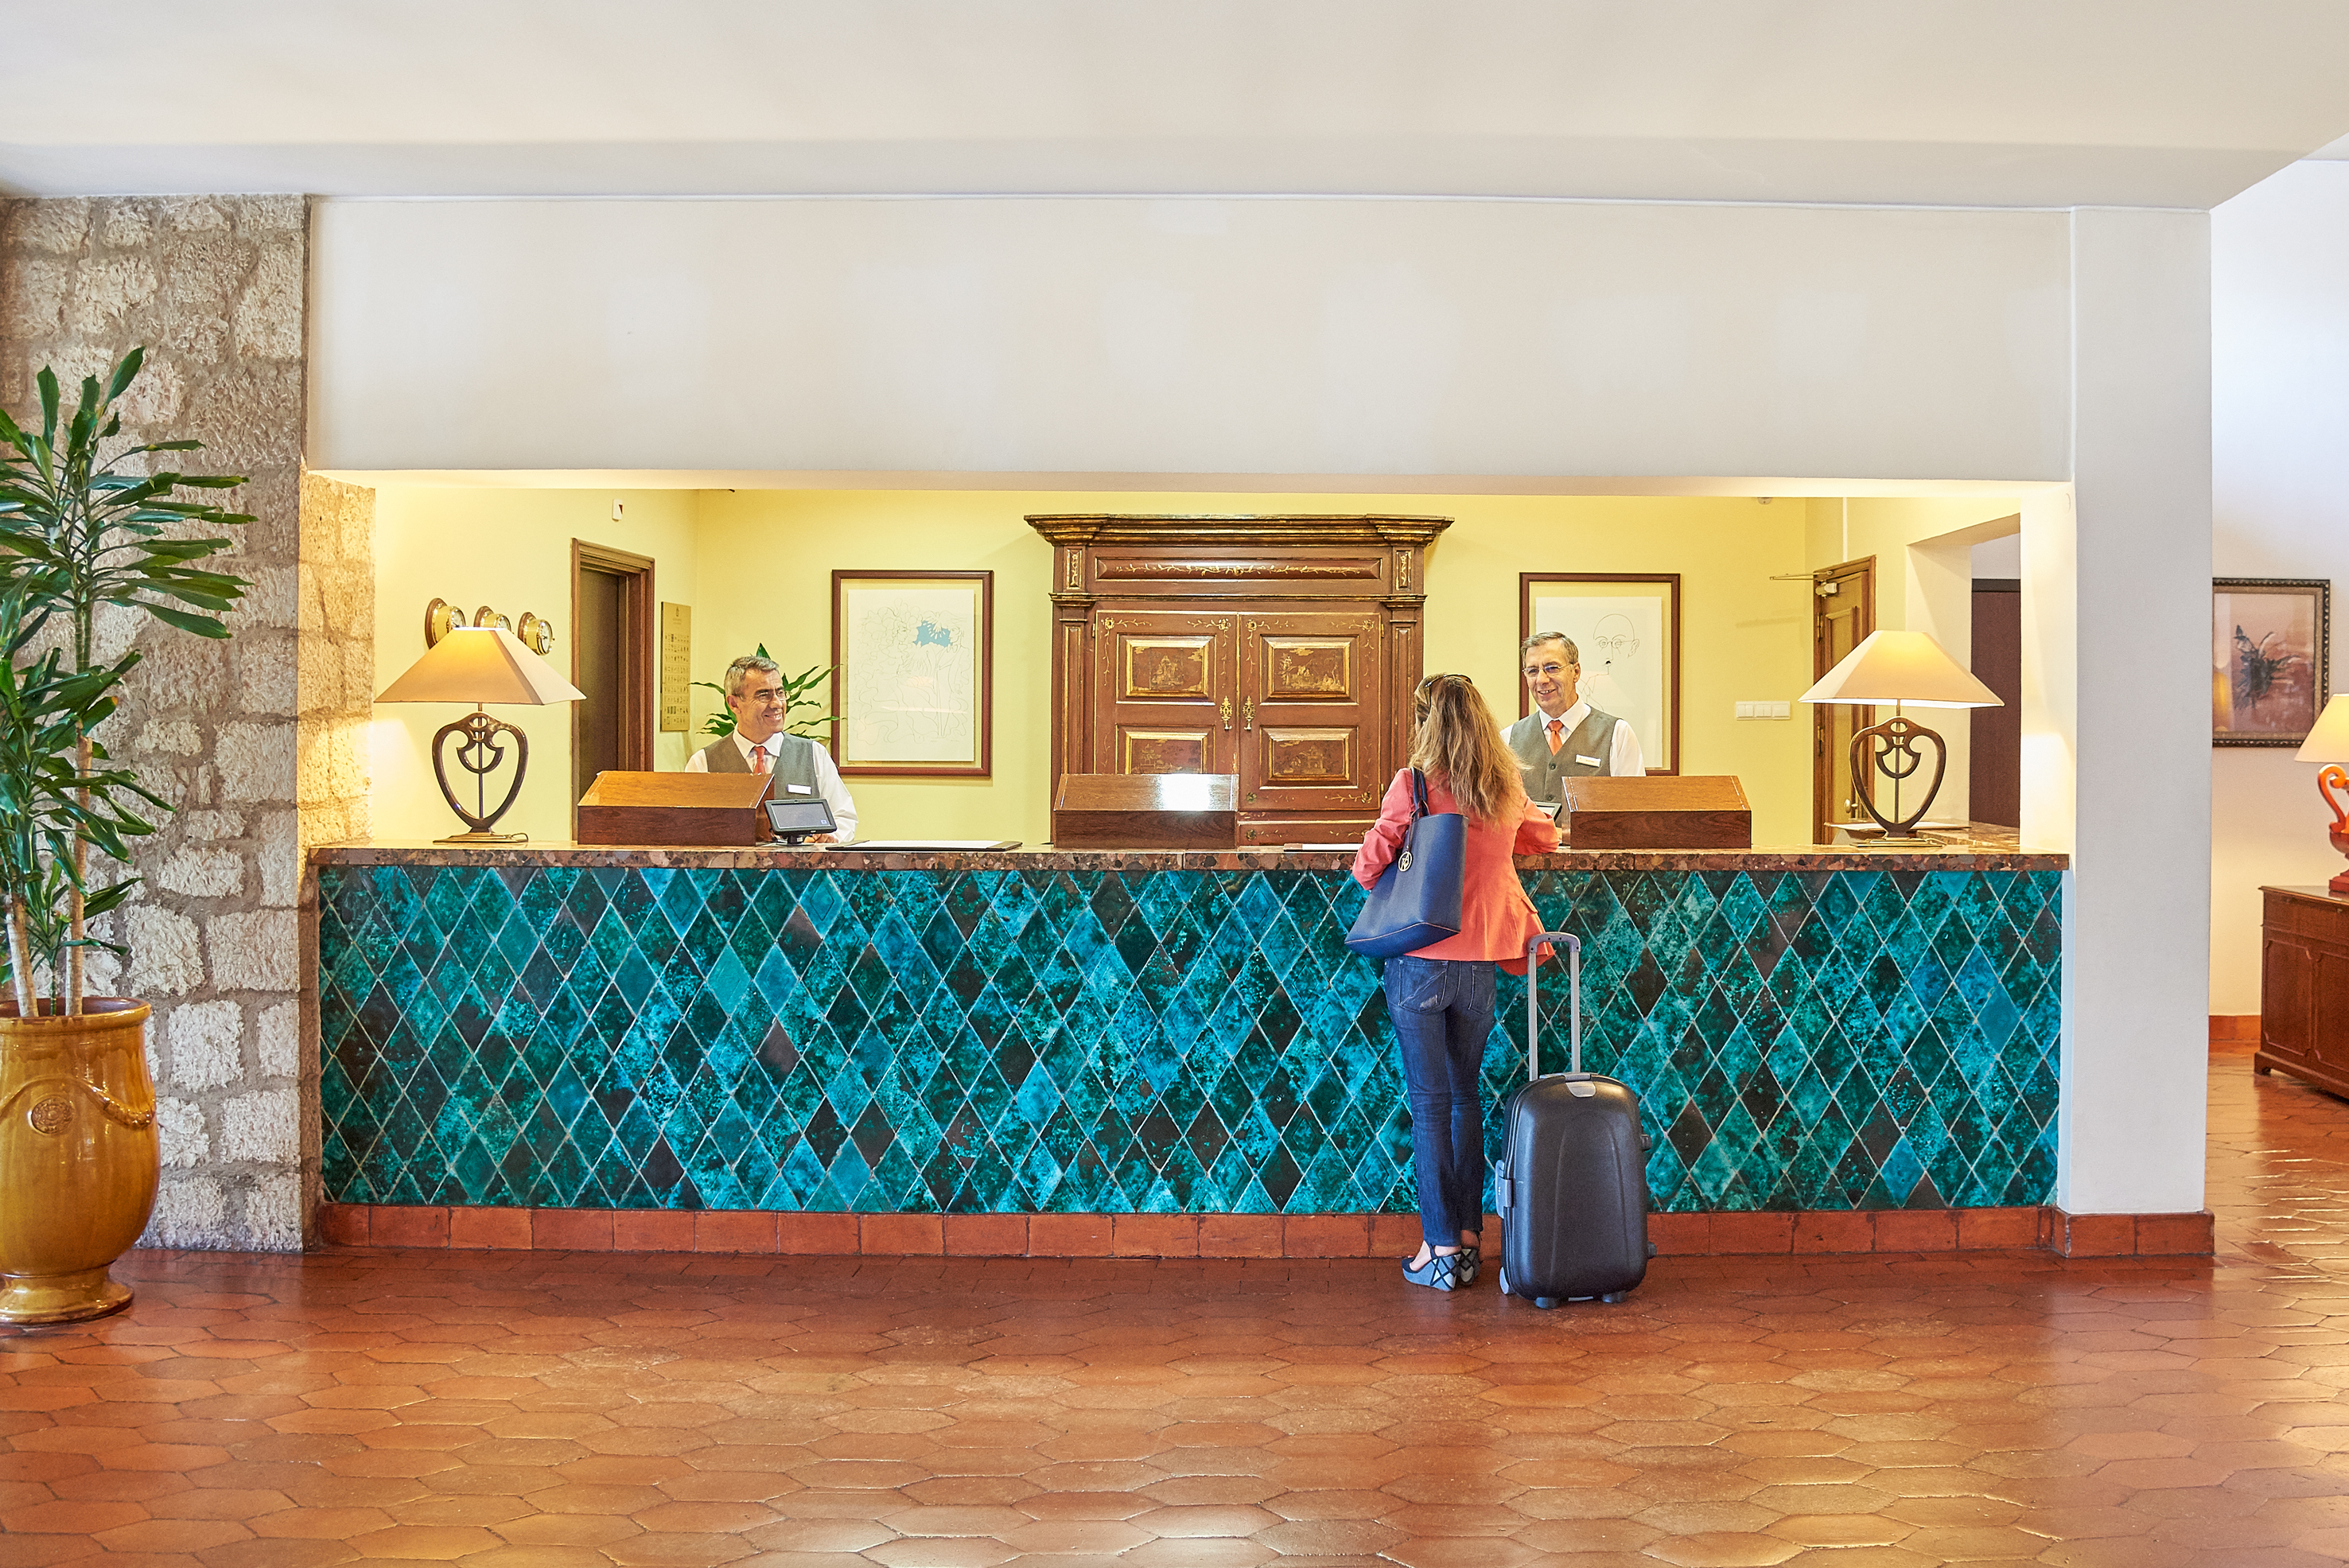 Gallery image of Penina Hotel & Golf - Portimao